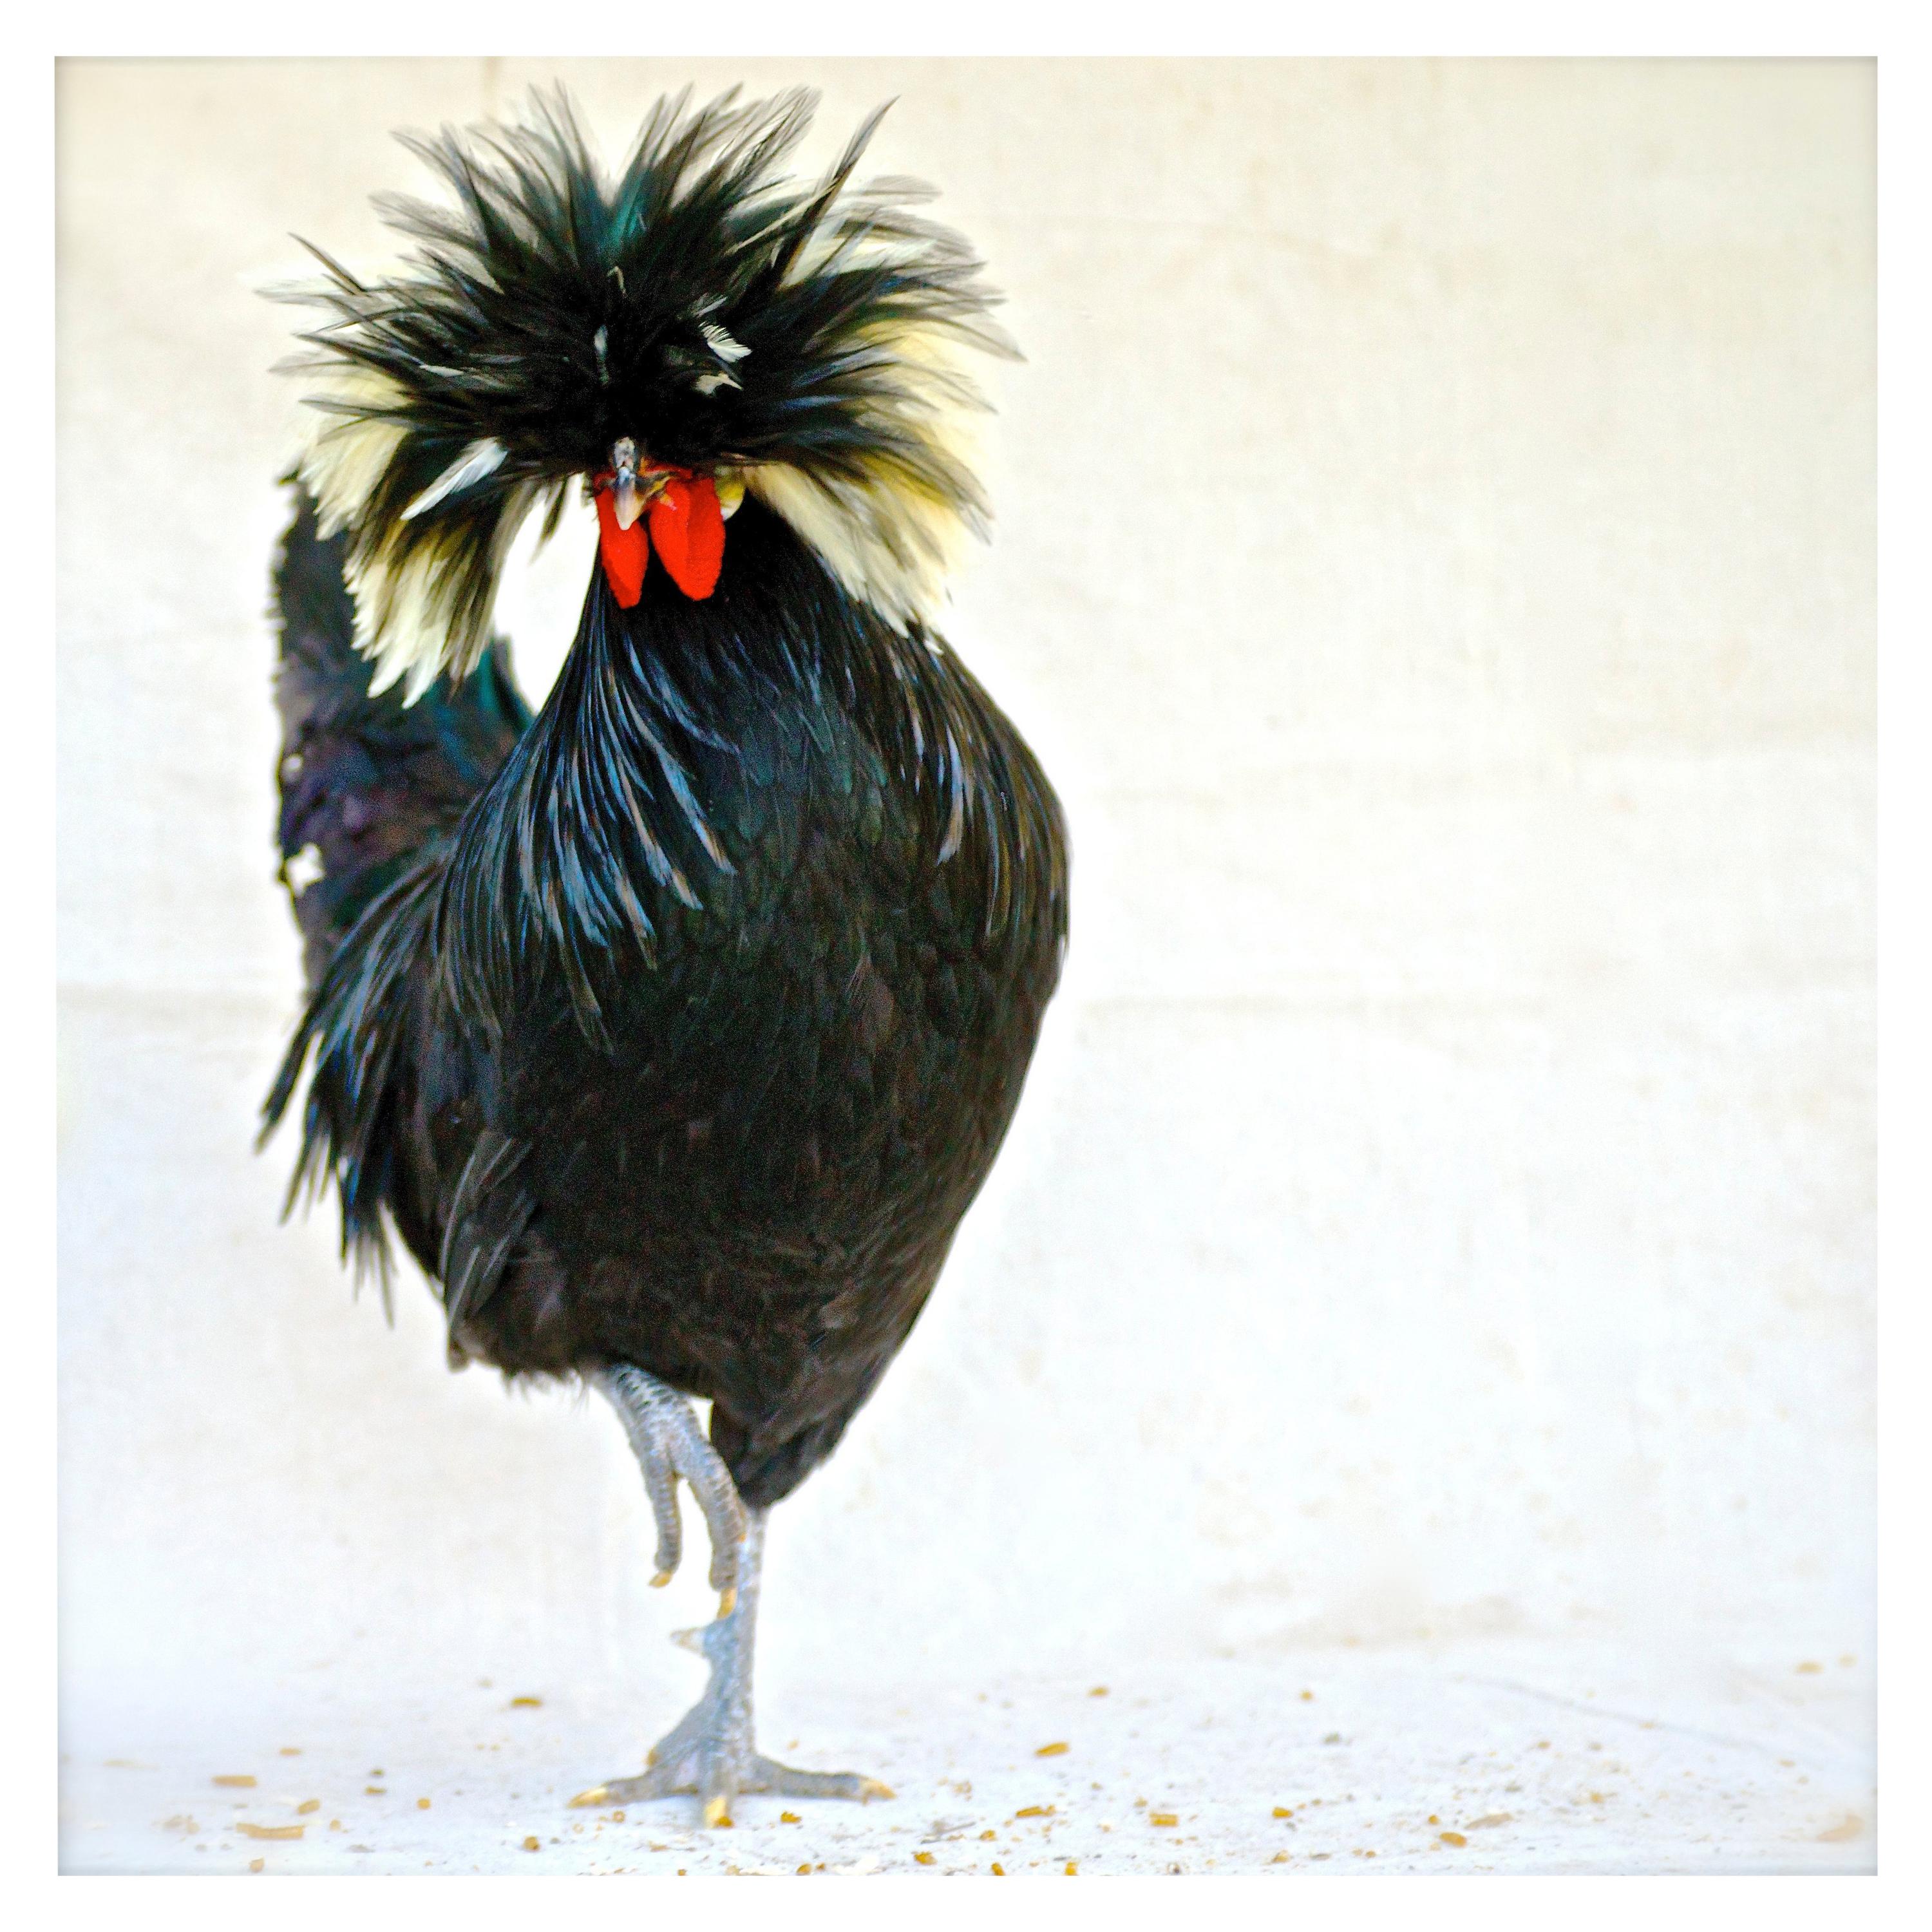 ""Isabella Rossellini's Heritage Chicken's" fotografiert von Patrice Casanova NY